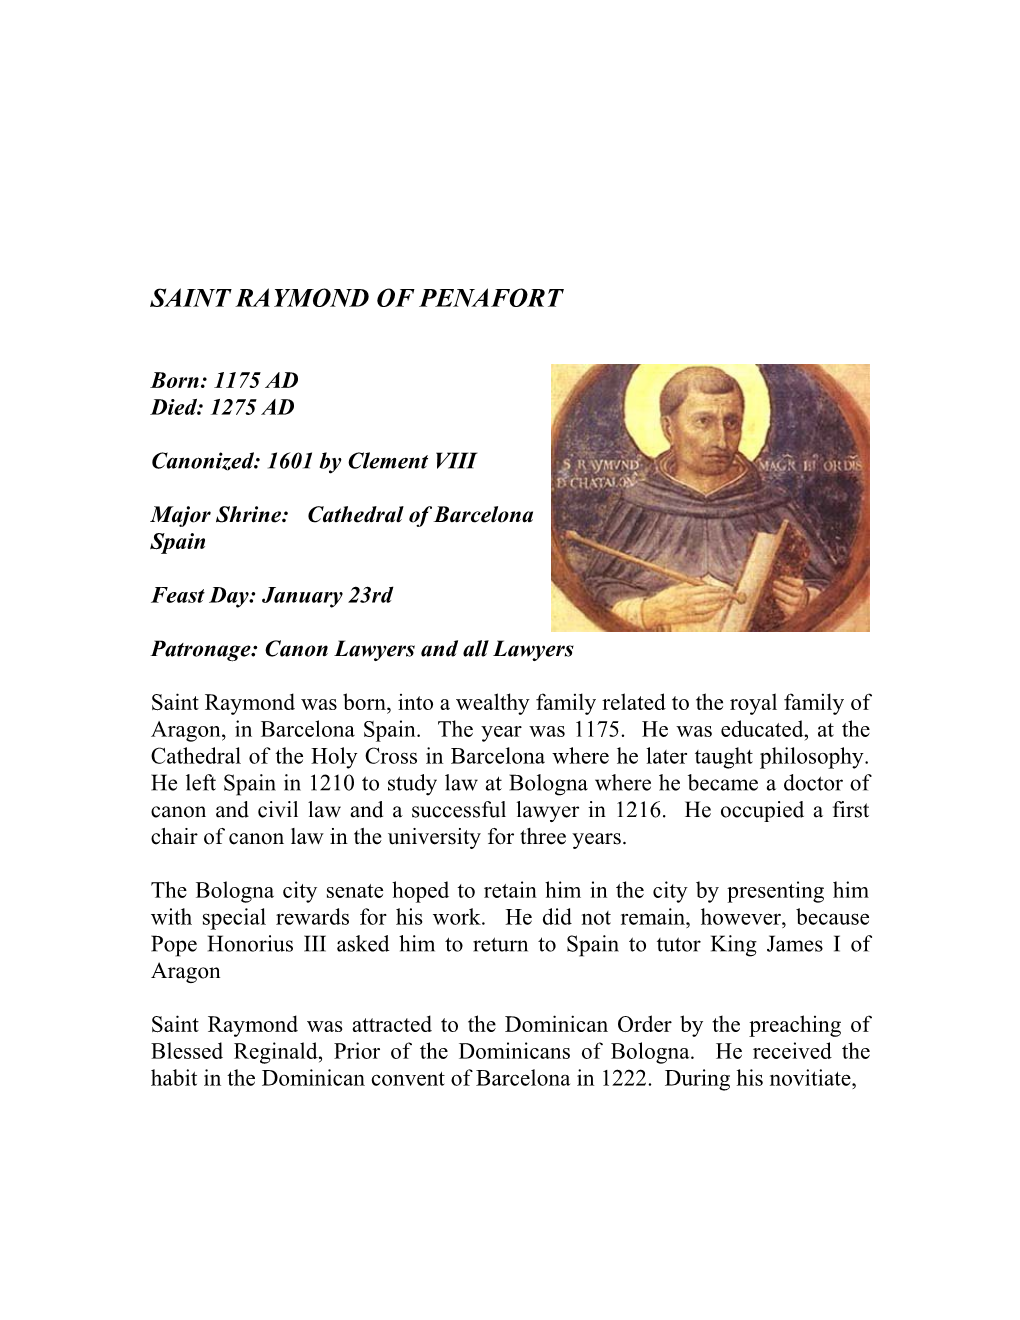 Saint Raymond of Penafort